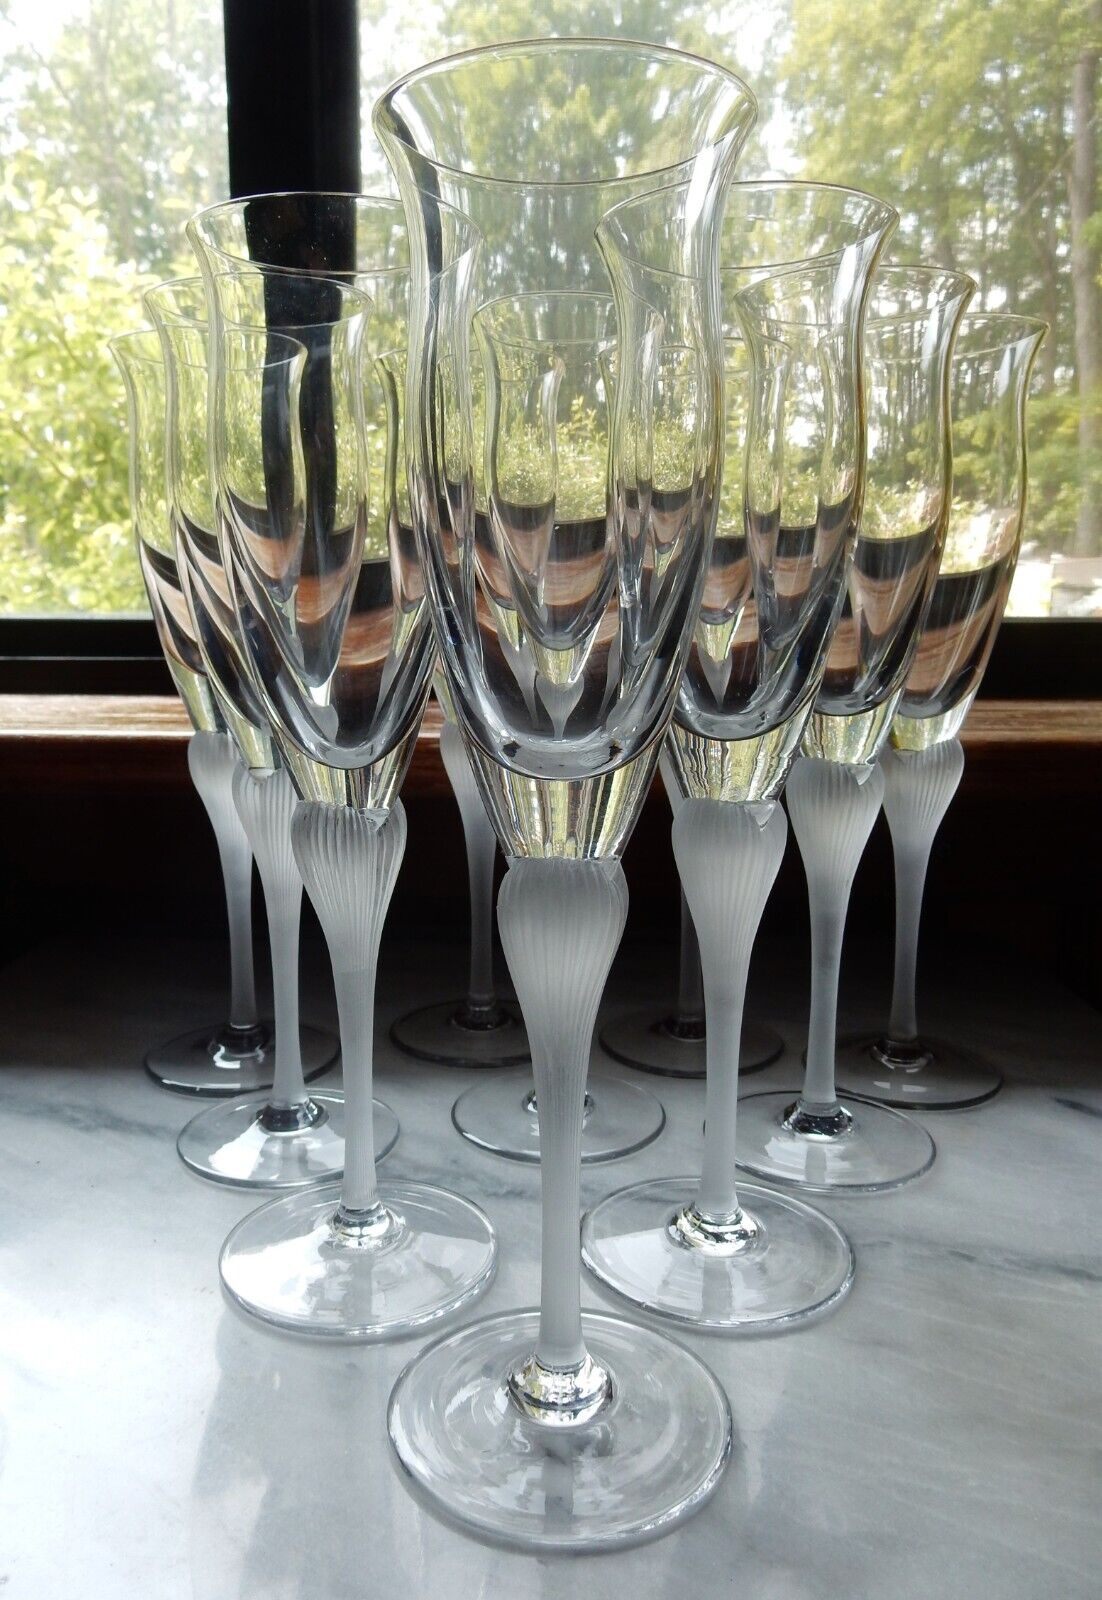 SET 10 Mikasa Crystal Stemware Fluted Champagne Glasses Sea Mist Frost Stem